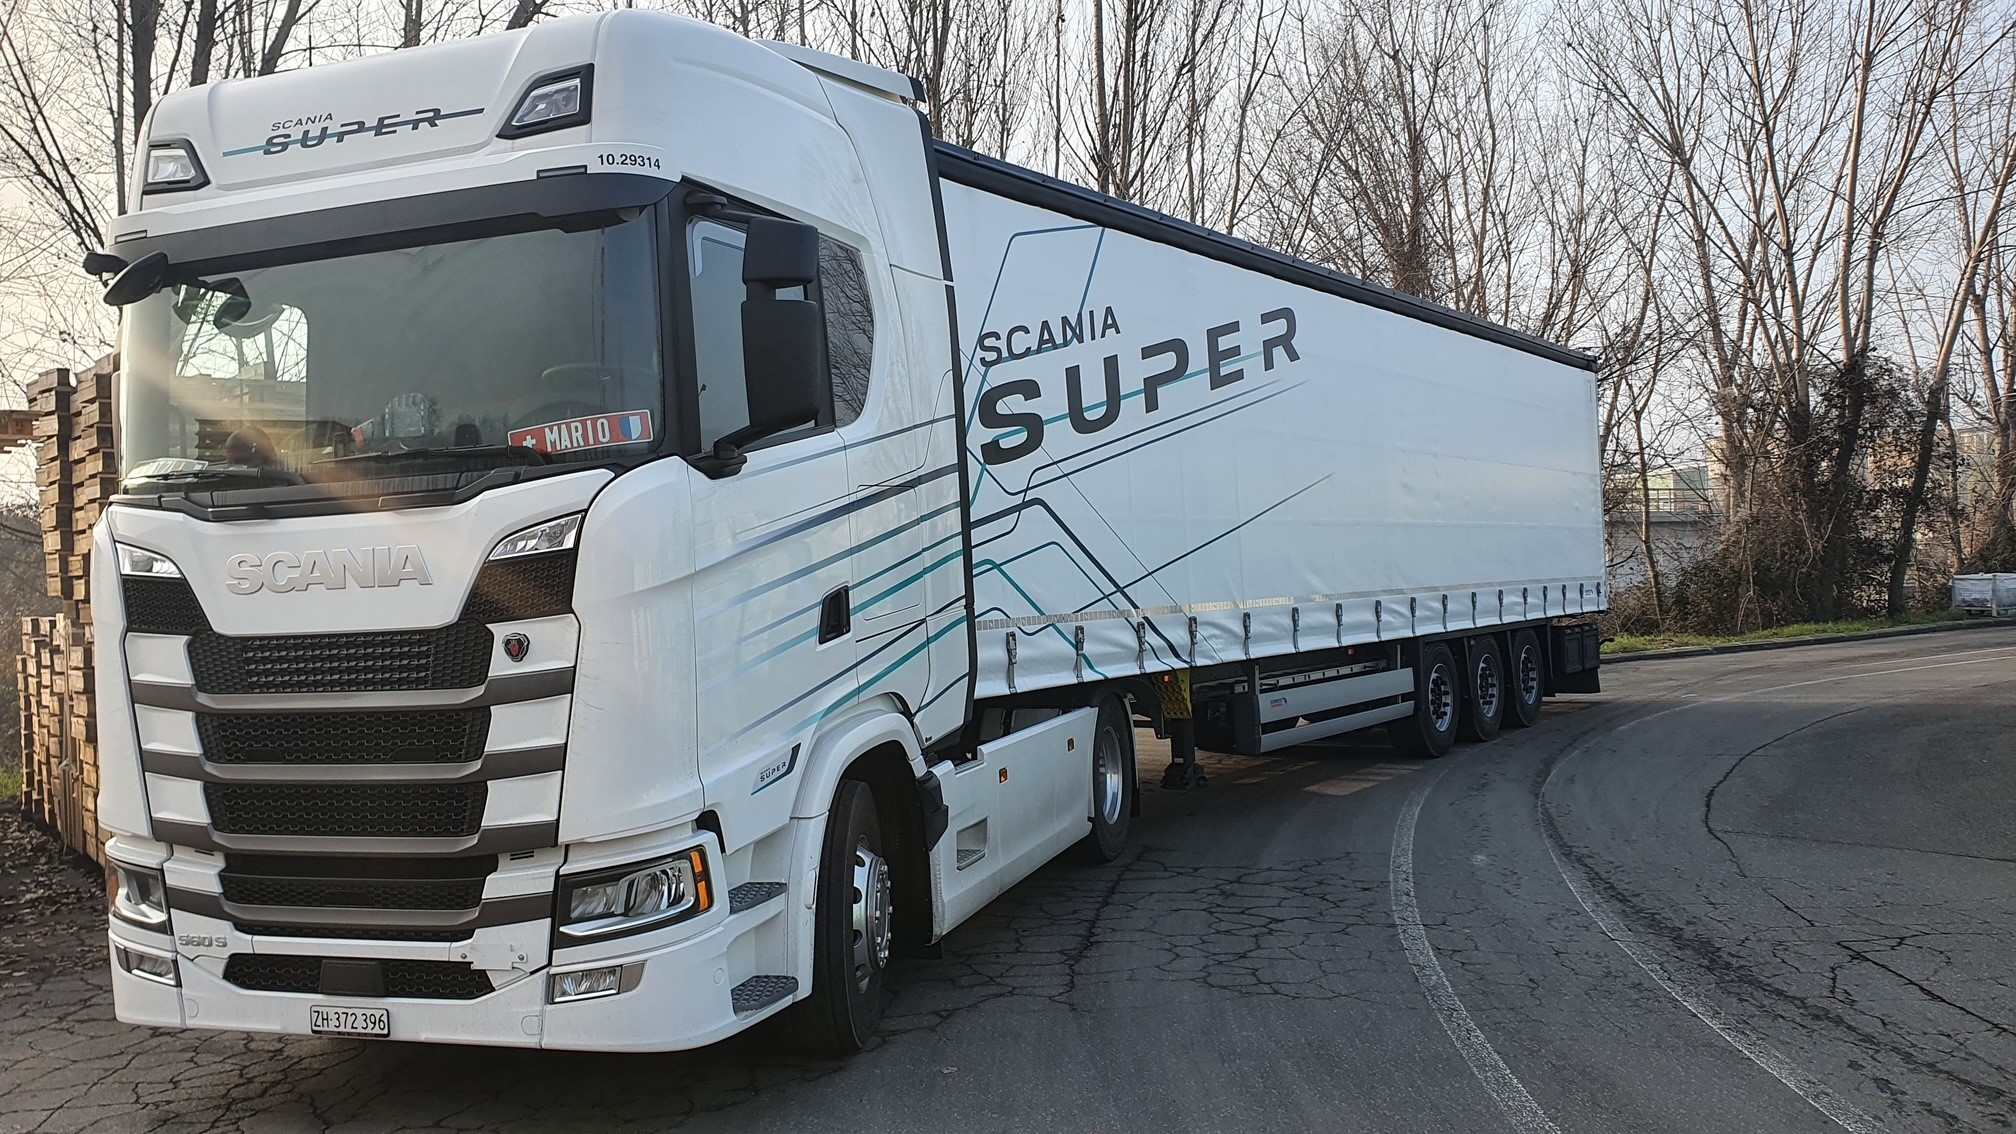 Verbrauchsreduktion Sidler Scania Super Test Beitragsbild TIR transNews